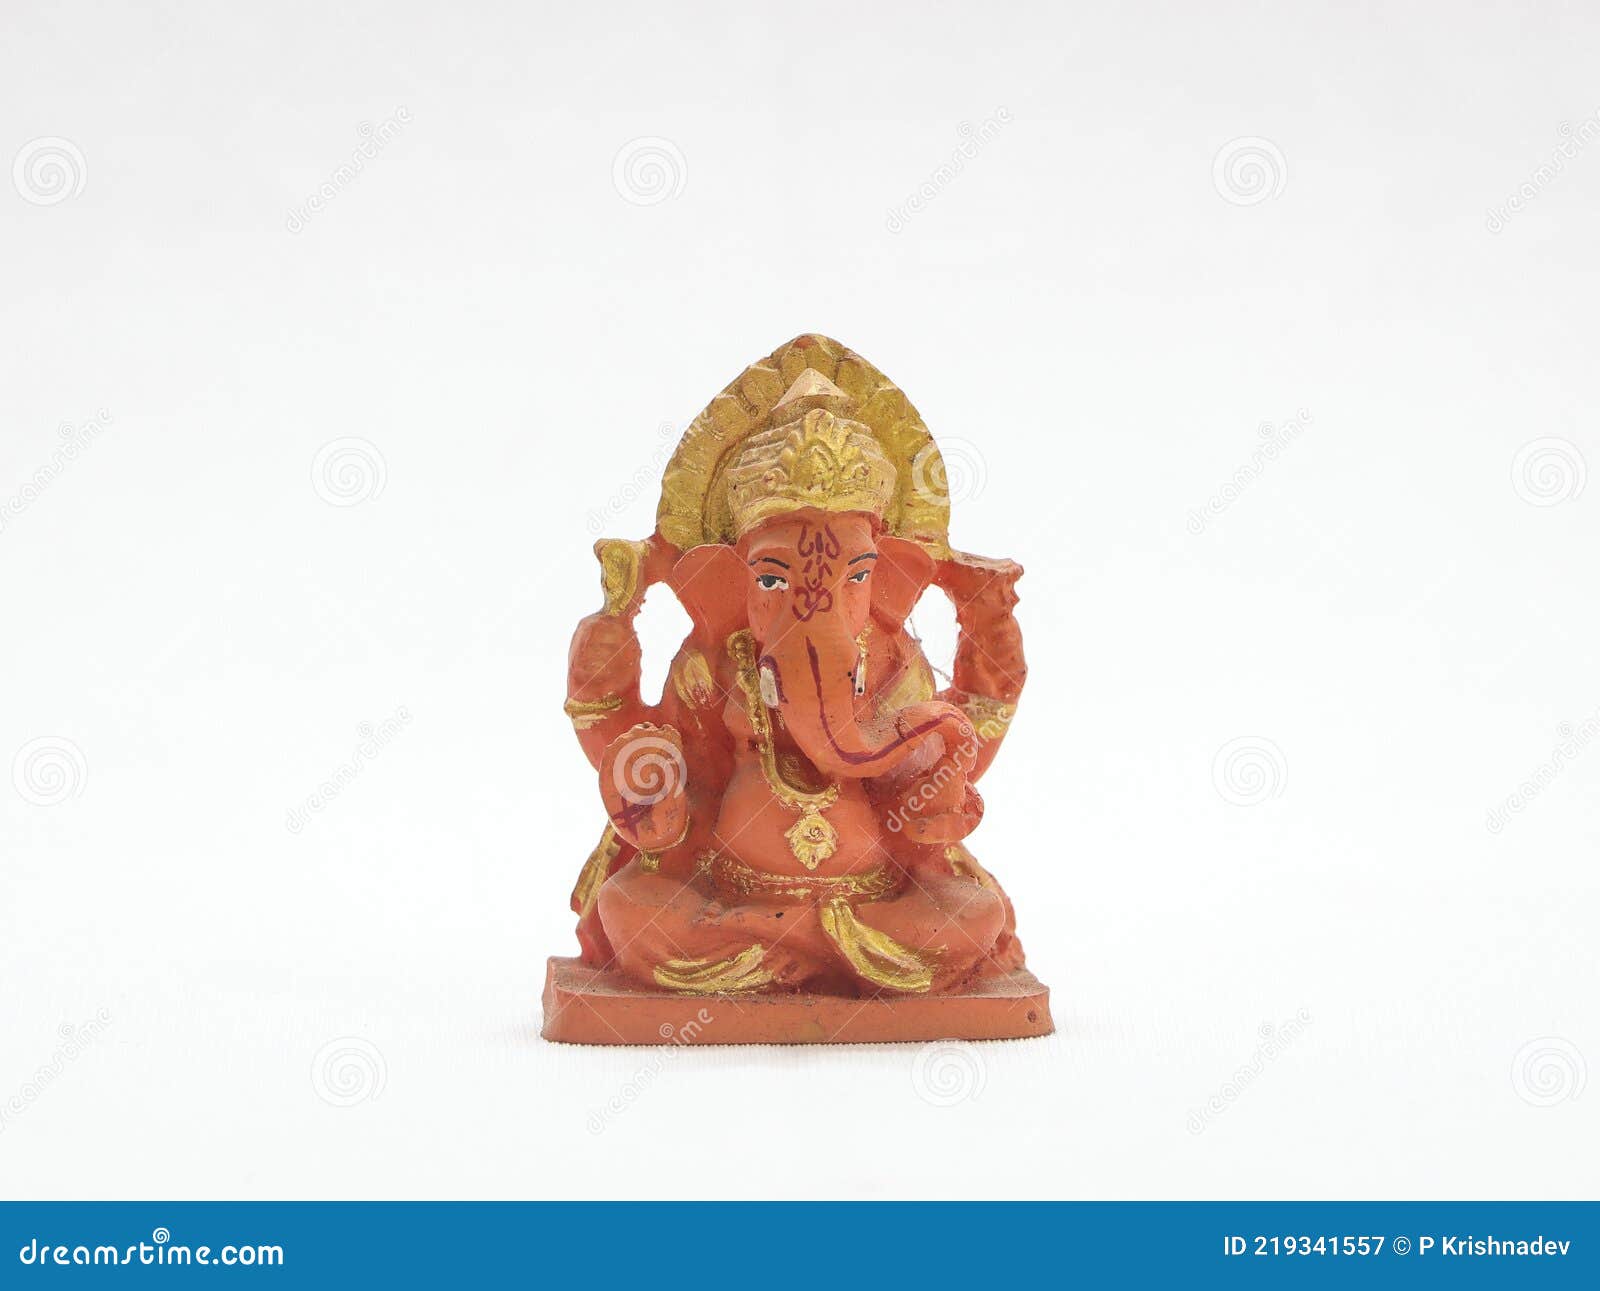 Hindu God Lord Ganesh Statue Stock Image - Image of lord, cartoon ...